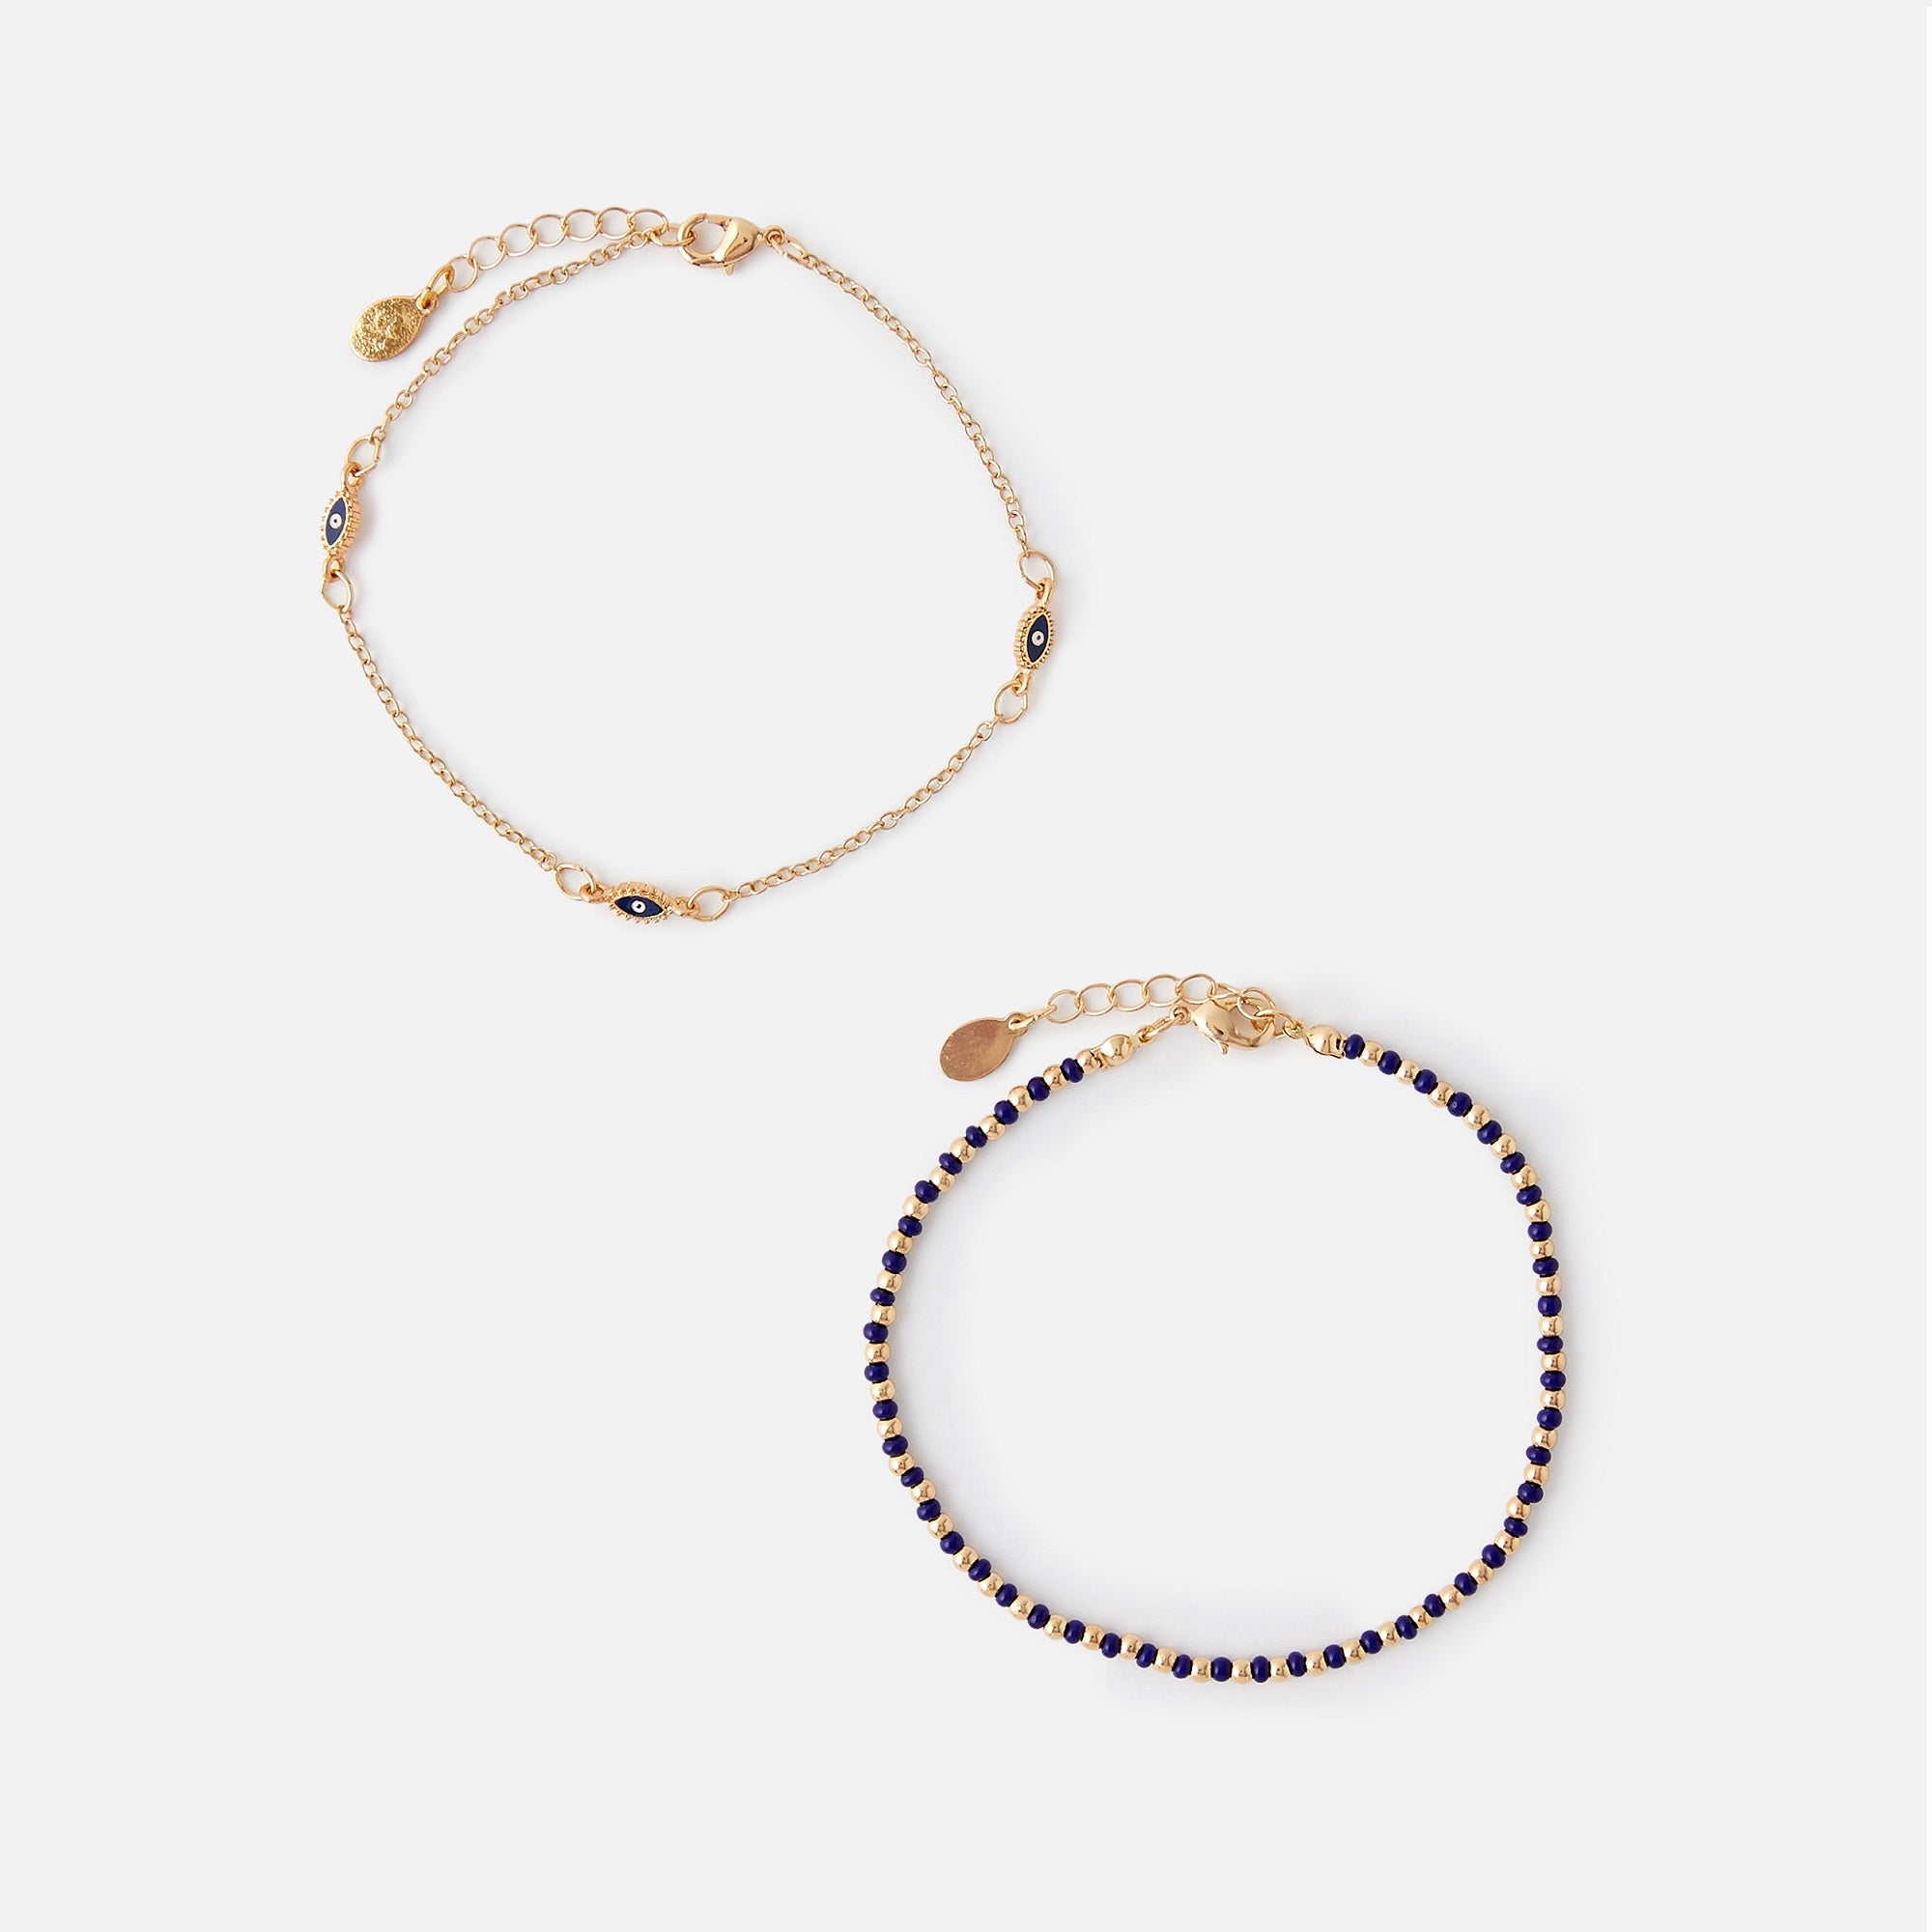 Buy Star Charm Bracelet| Made with BIS Hallmarked Gold | Starkle